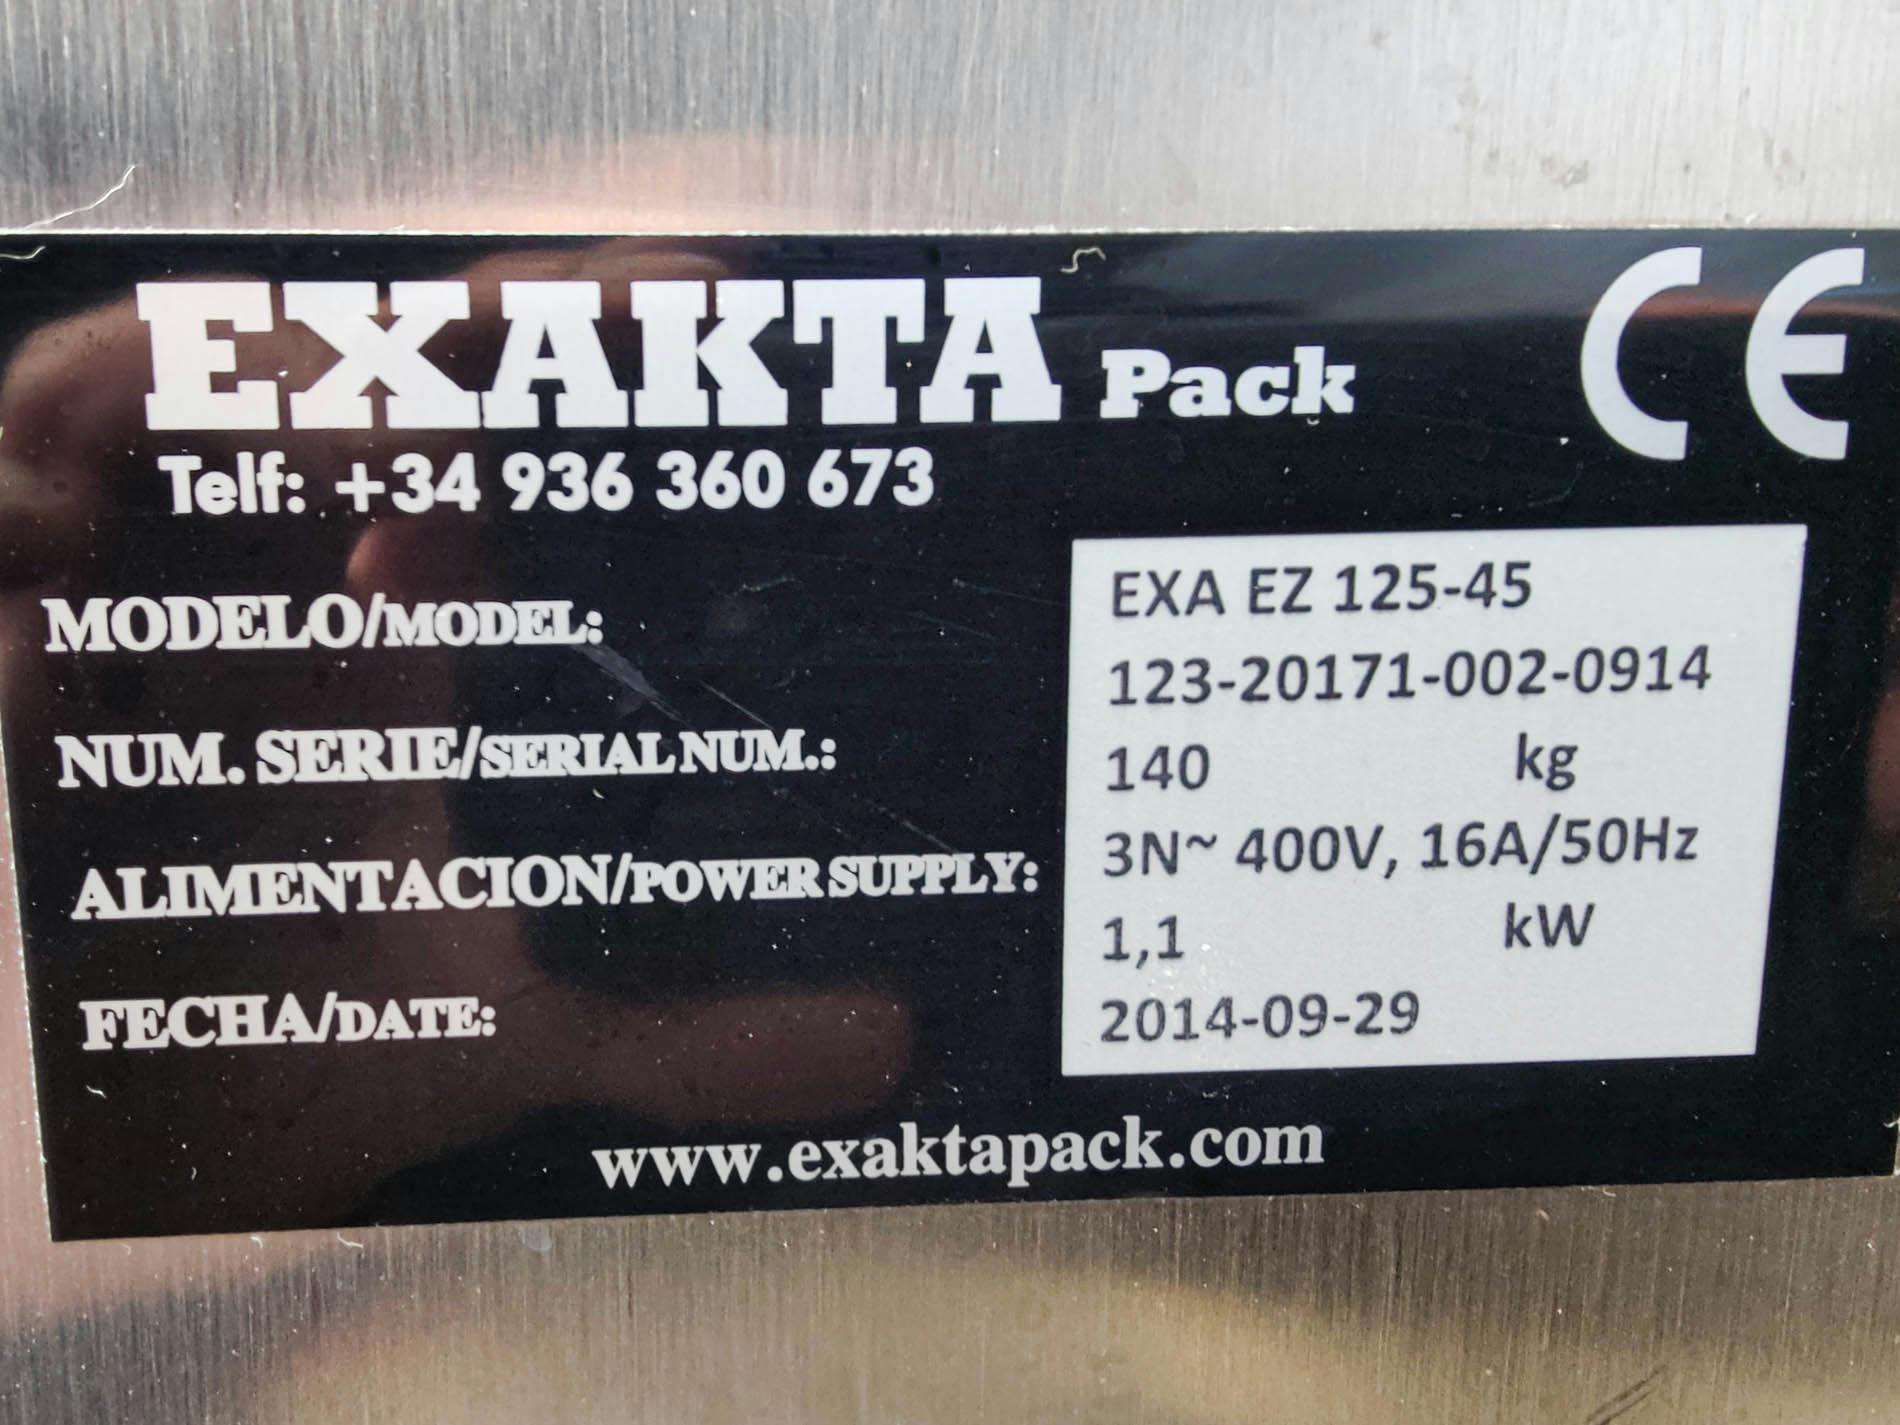 Exakta Pack EXA EZ 125-45 - Cinta transportadora - image 9